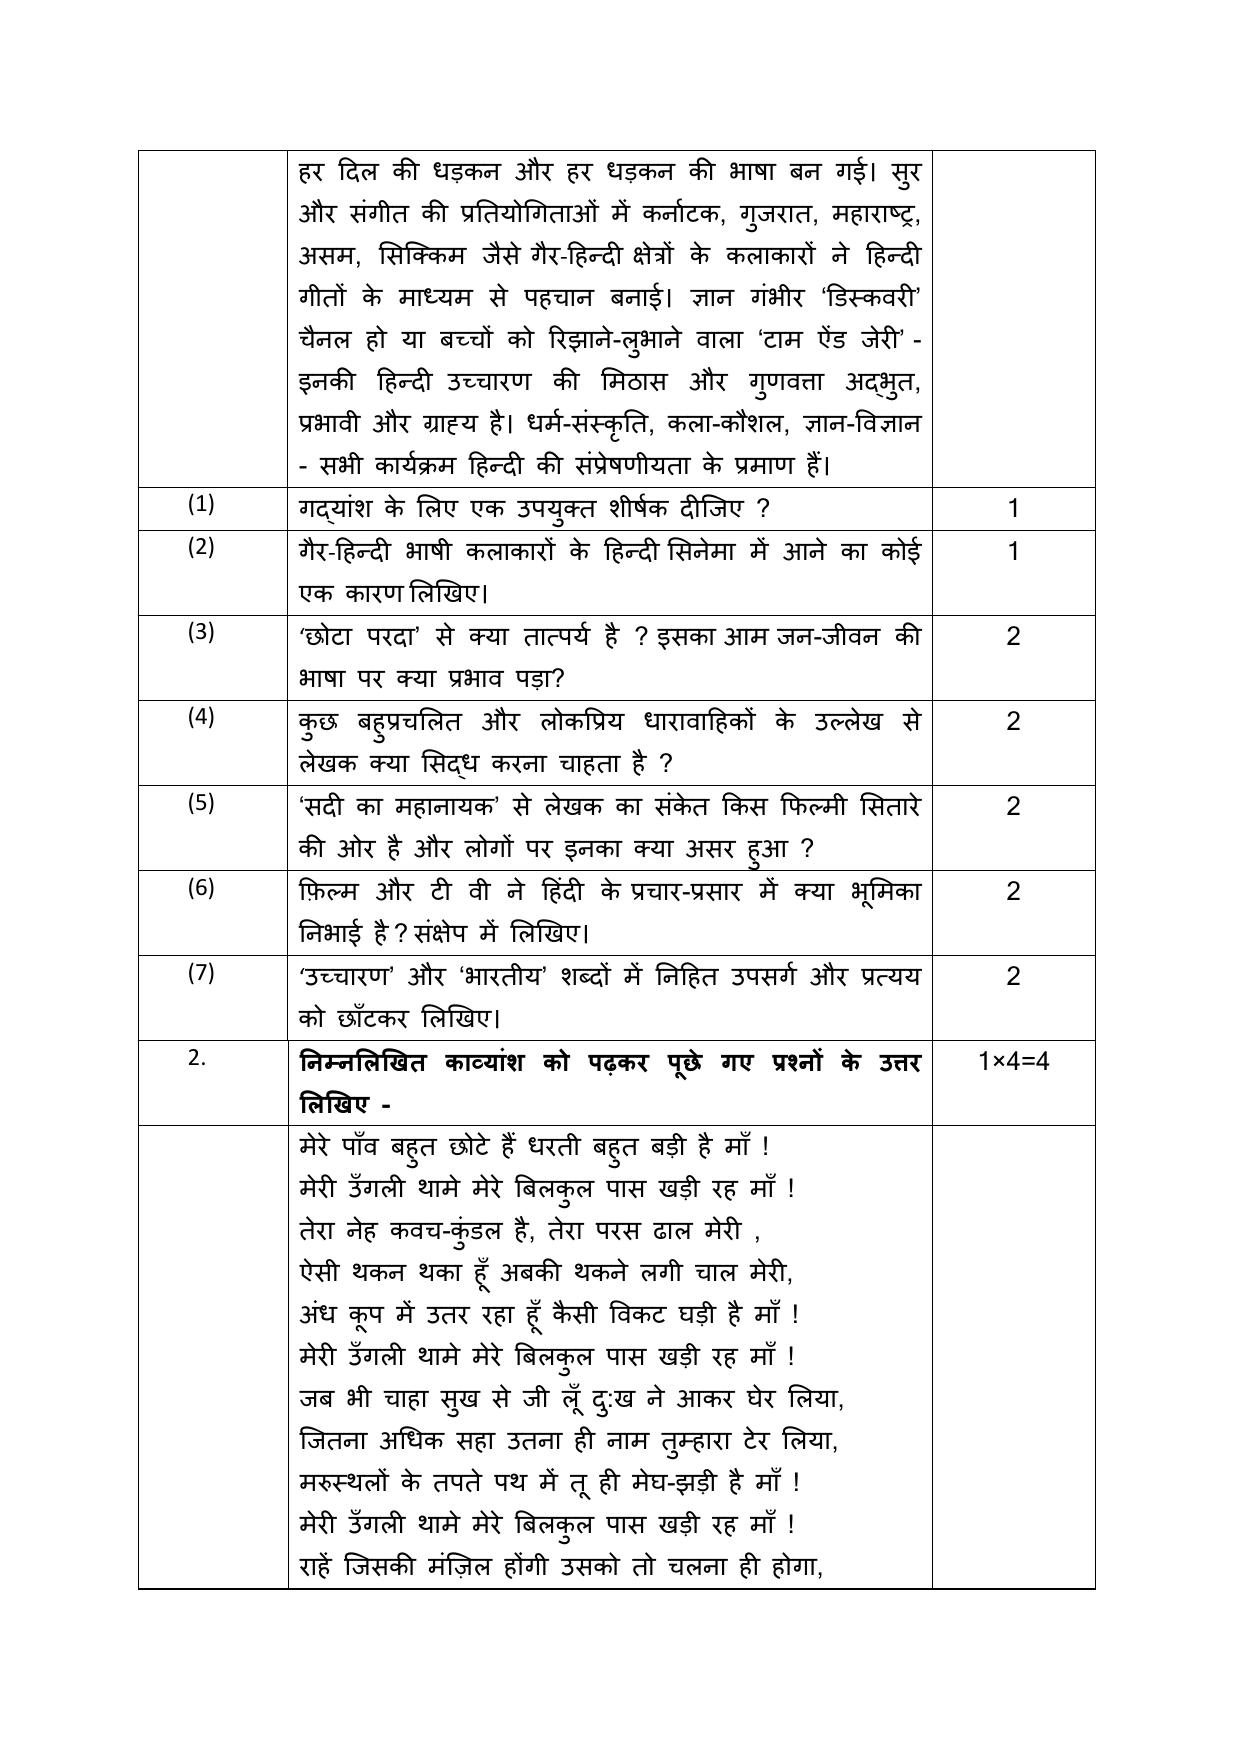 CBSE Class 12 Hindi Adhaar -Sample Paper 2019-20 - Page 2